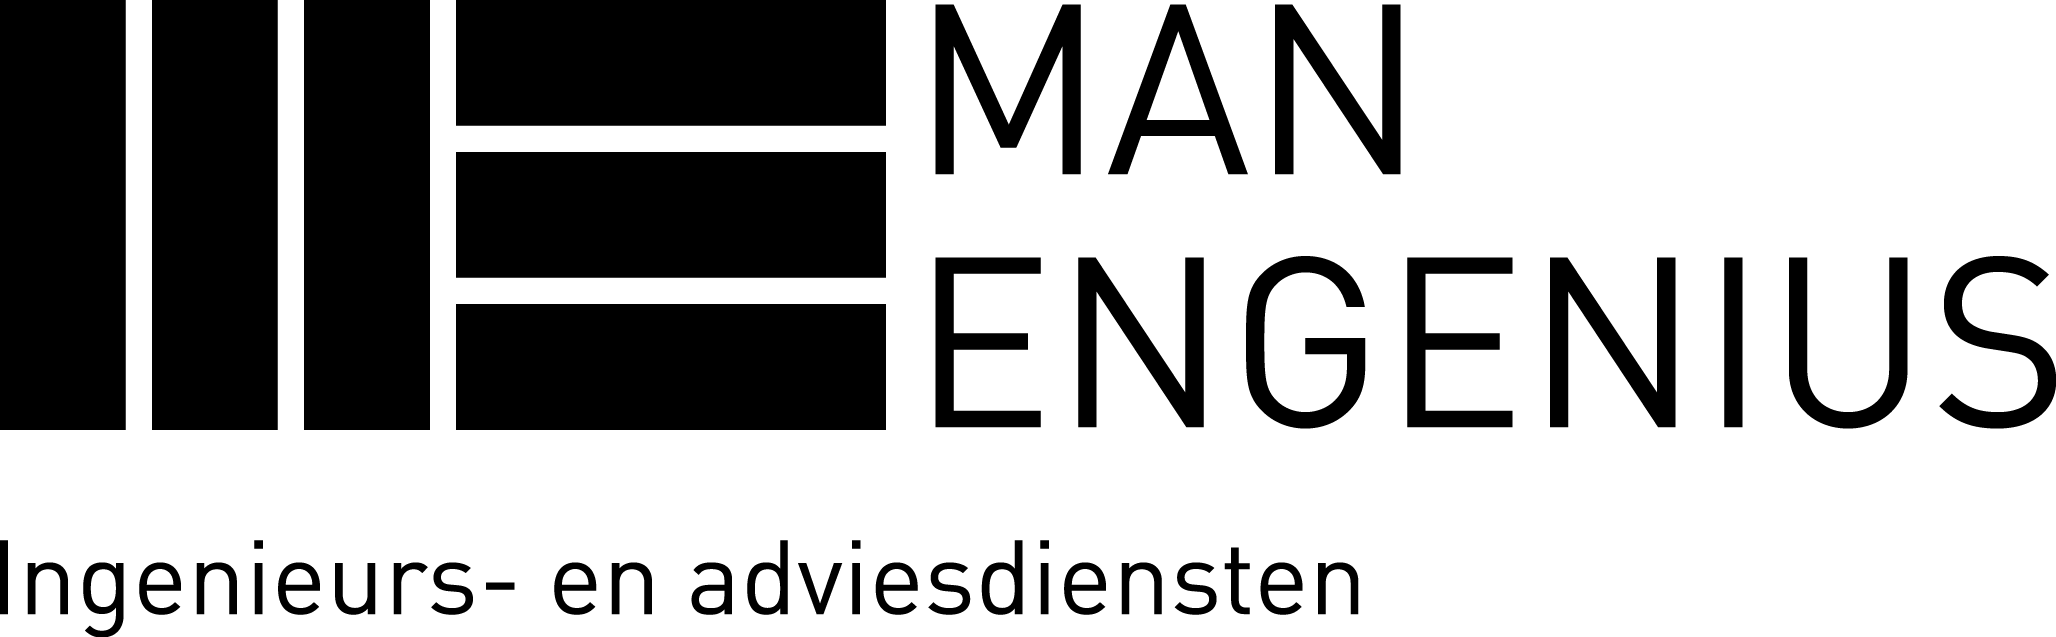 ManEngenius logo - InCompany klant